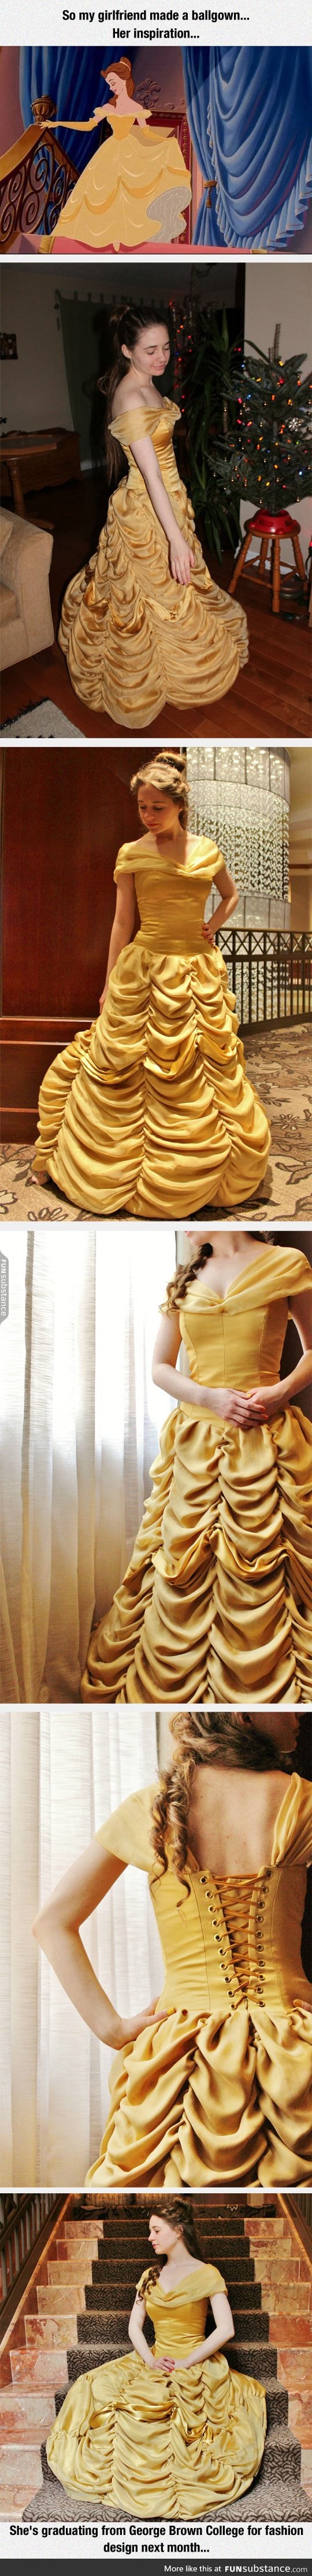 Amazing dress inspired by a disney princess